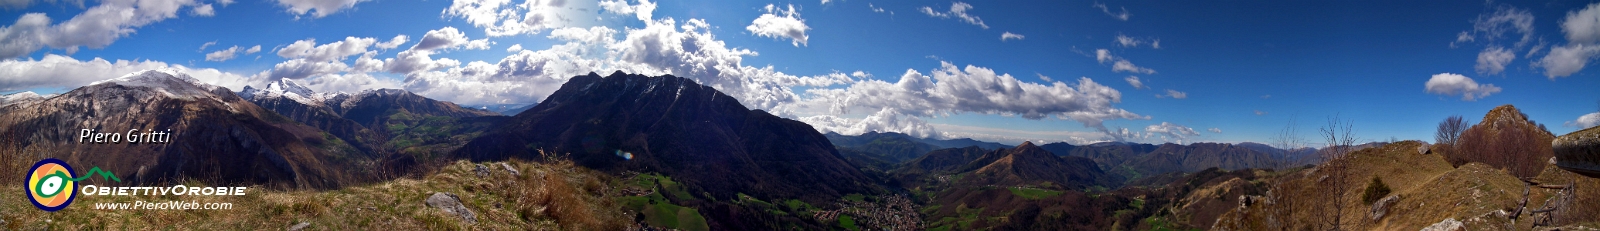 04 Panoramica dal Monte Castello -4.jpg